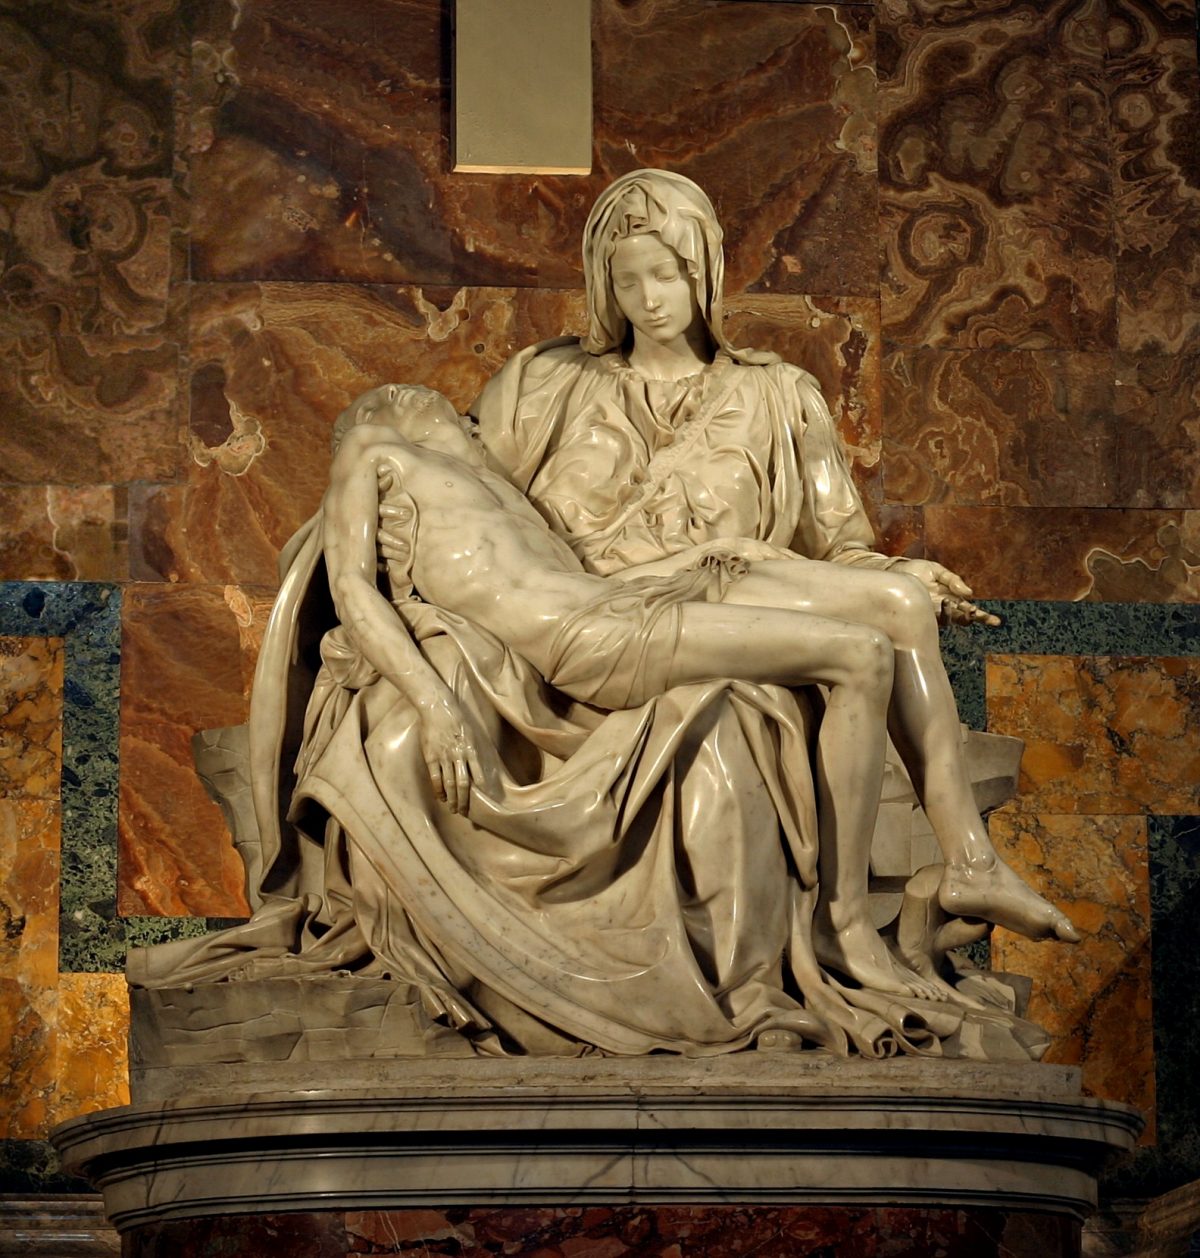 Michelangelo's "Pietà" housed in St. Peter's Basilica in the Vatican. (Public Domain)